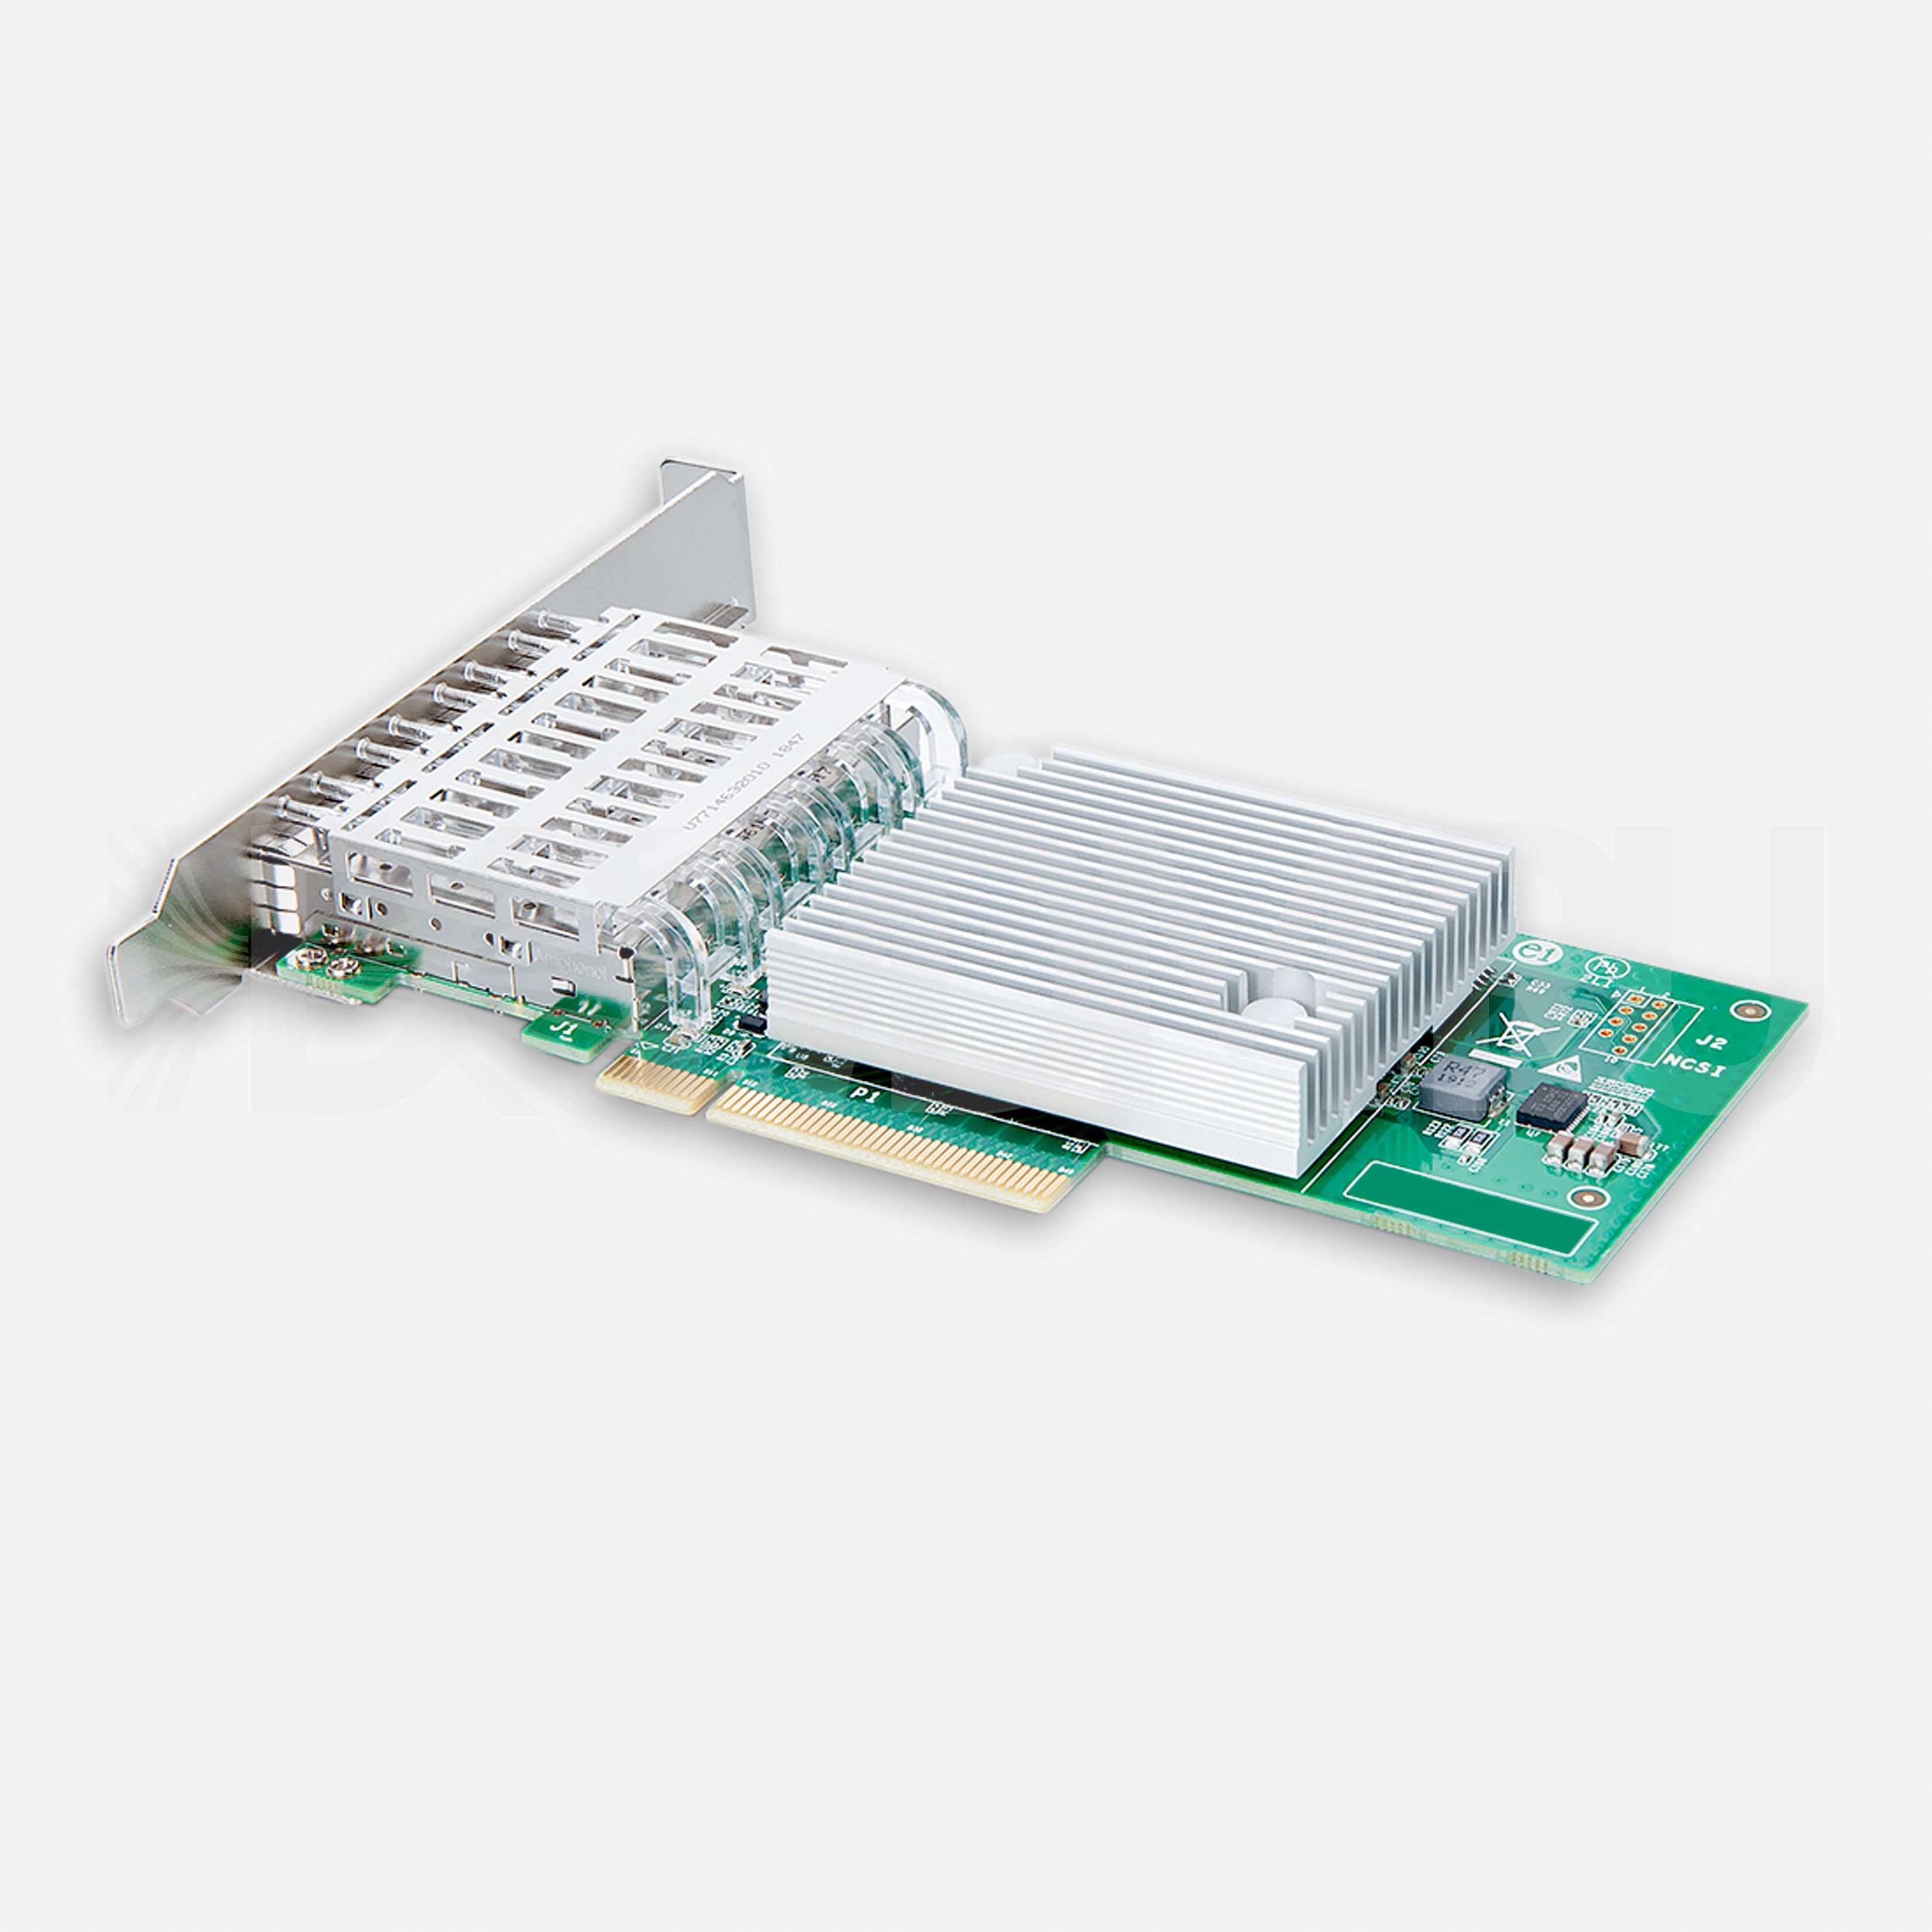 Сетевая карта 10 Gb/s (NIC), 4 порта SFP+, Intel XL710-BM1 Controller, PCIe 3.0 X8 - ДВДМ.РУ (DSO-N-10G4S1-XL710-X30-8)